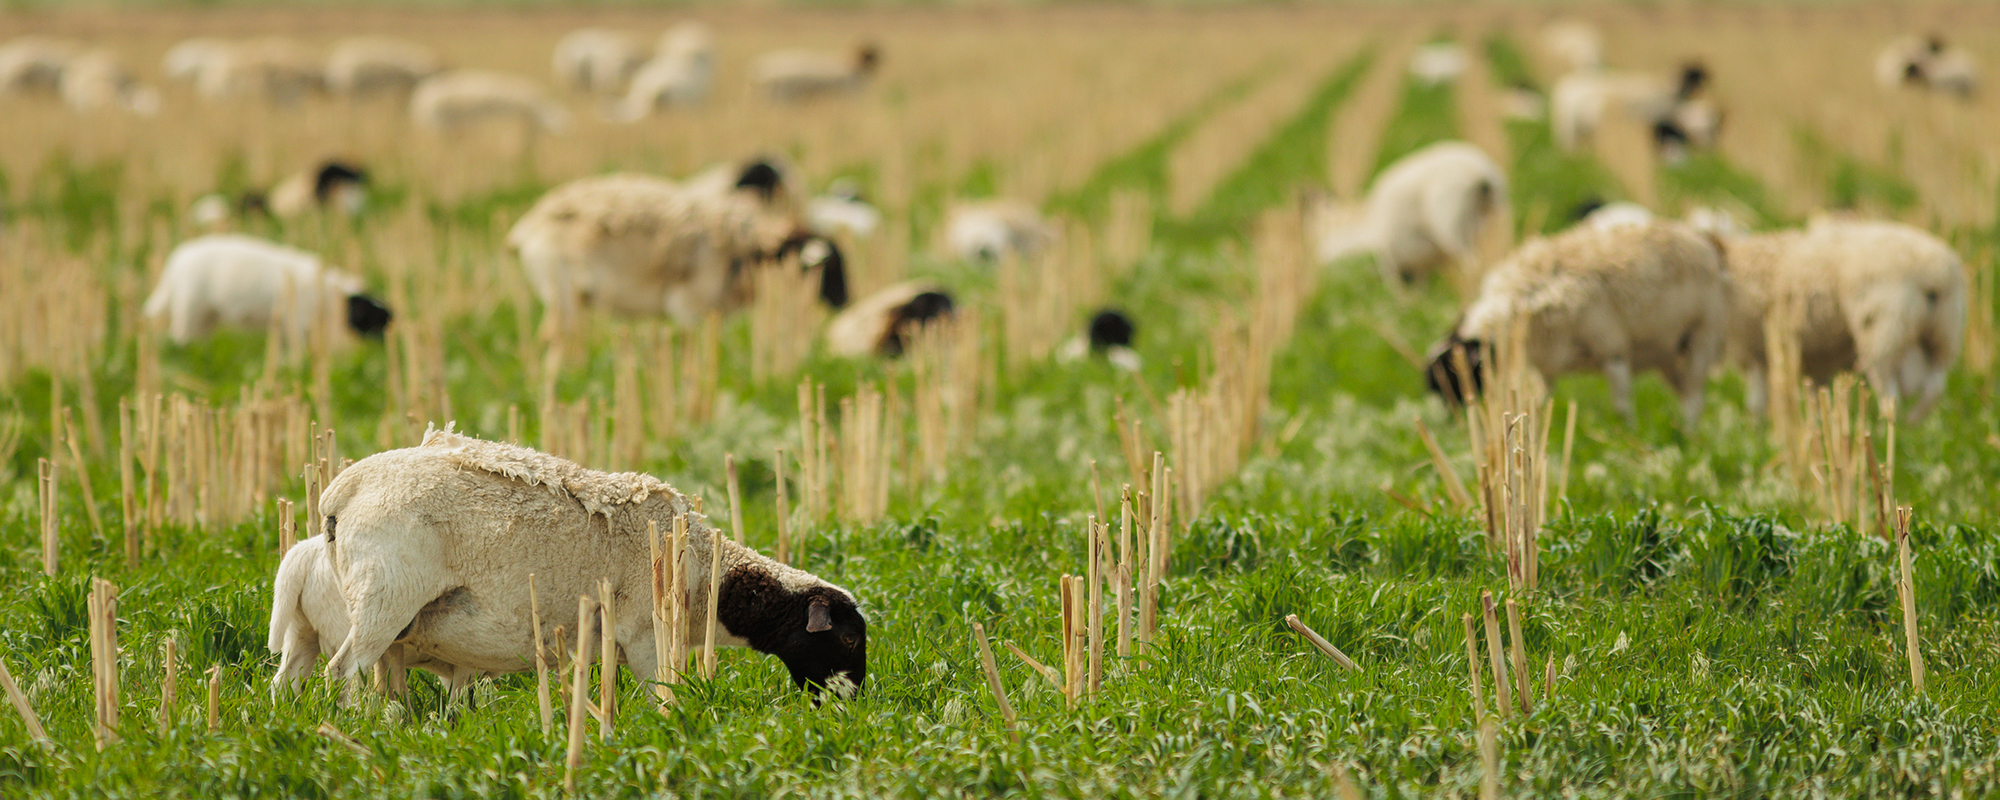 Dorper sheep graze in field